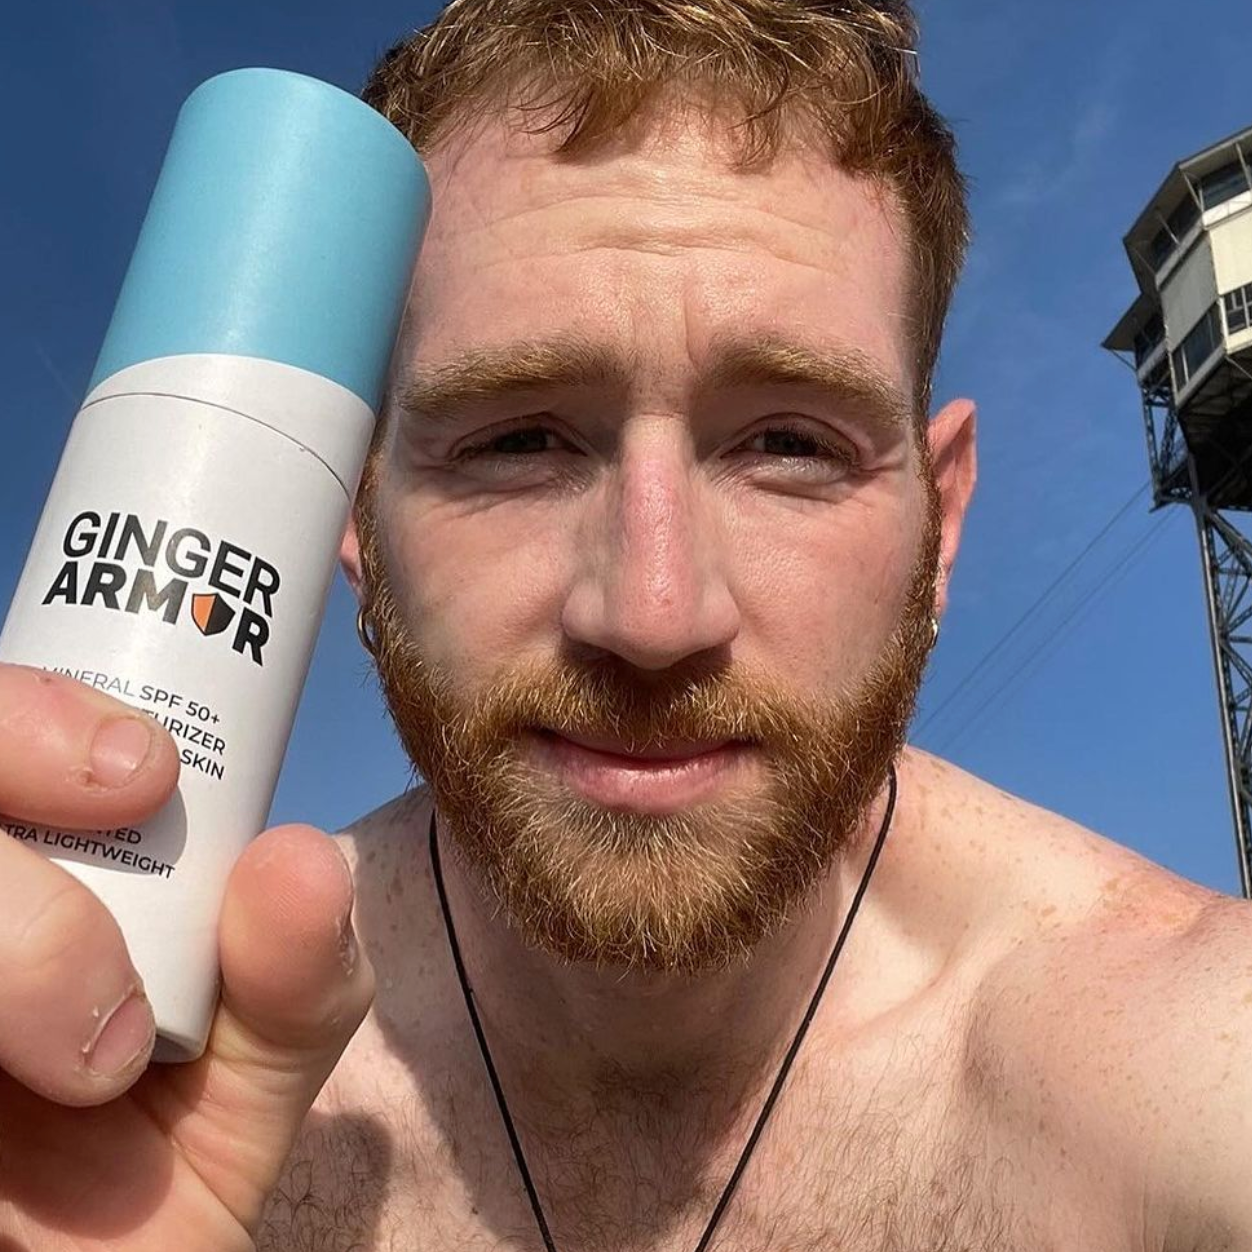 Ginger Armor SPF 50+ Mineral Sunscreen 10ml Travel-Size Spray